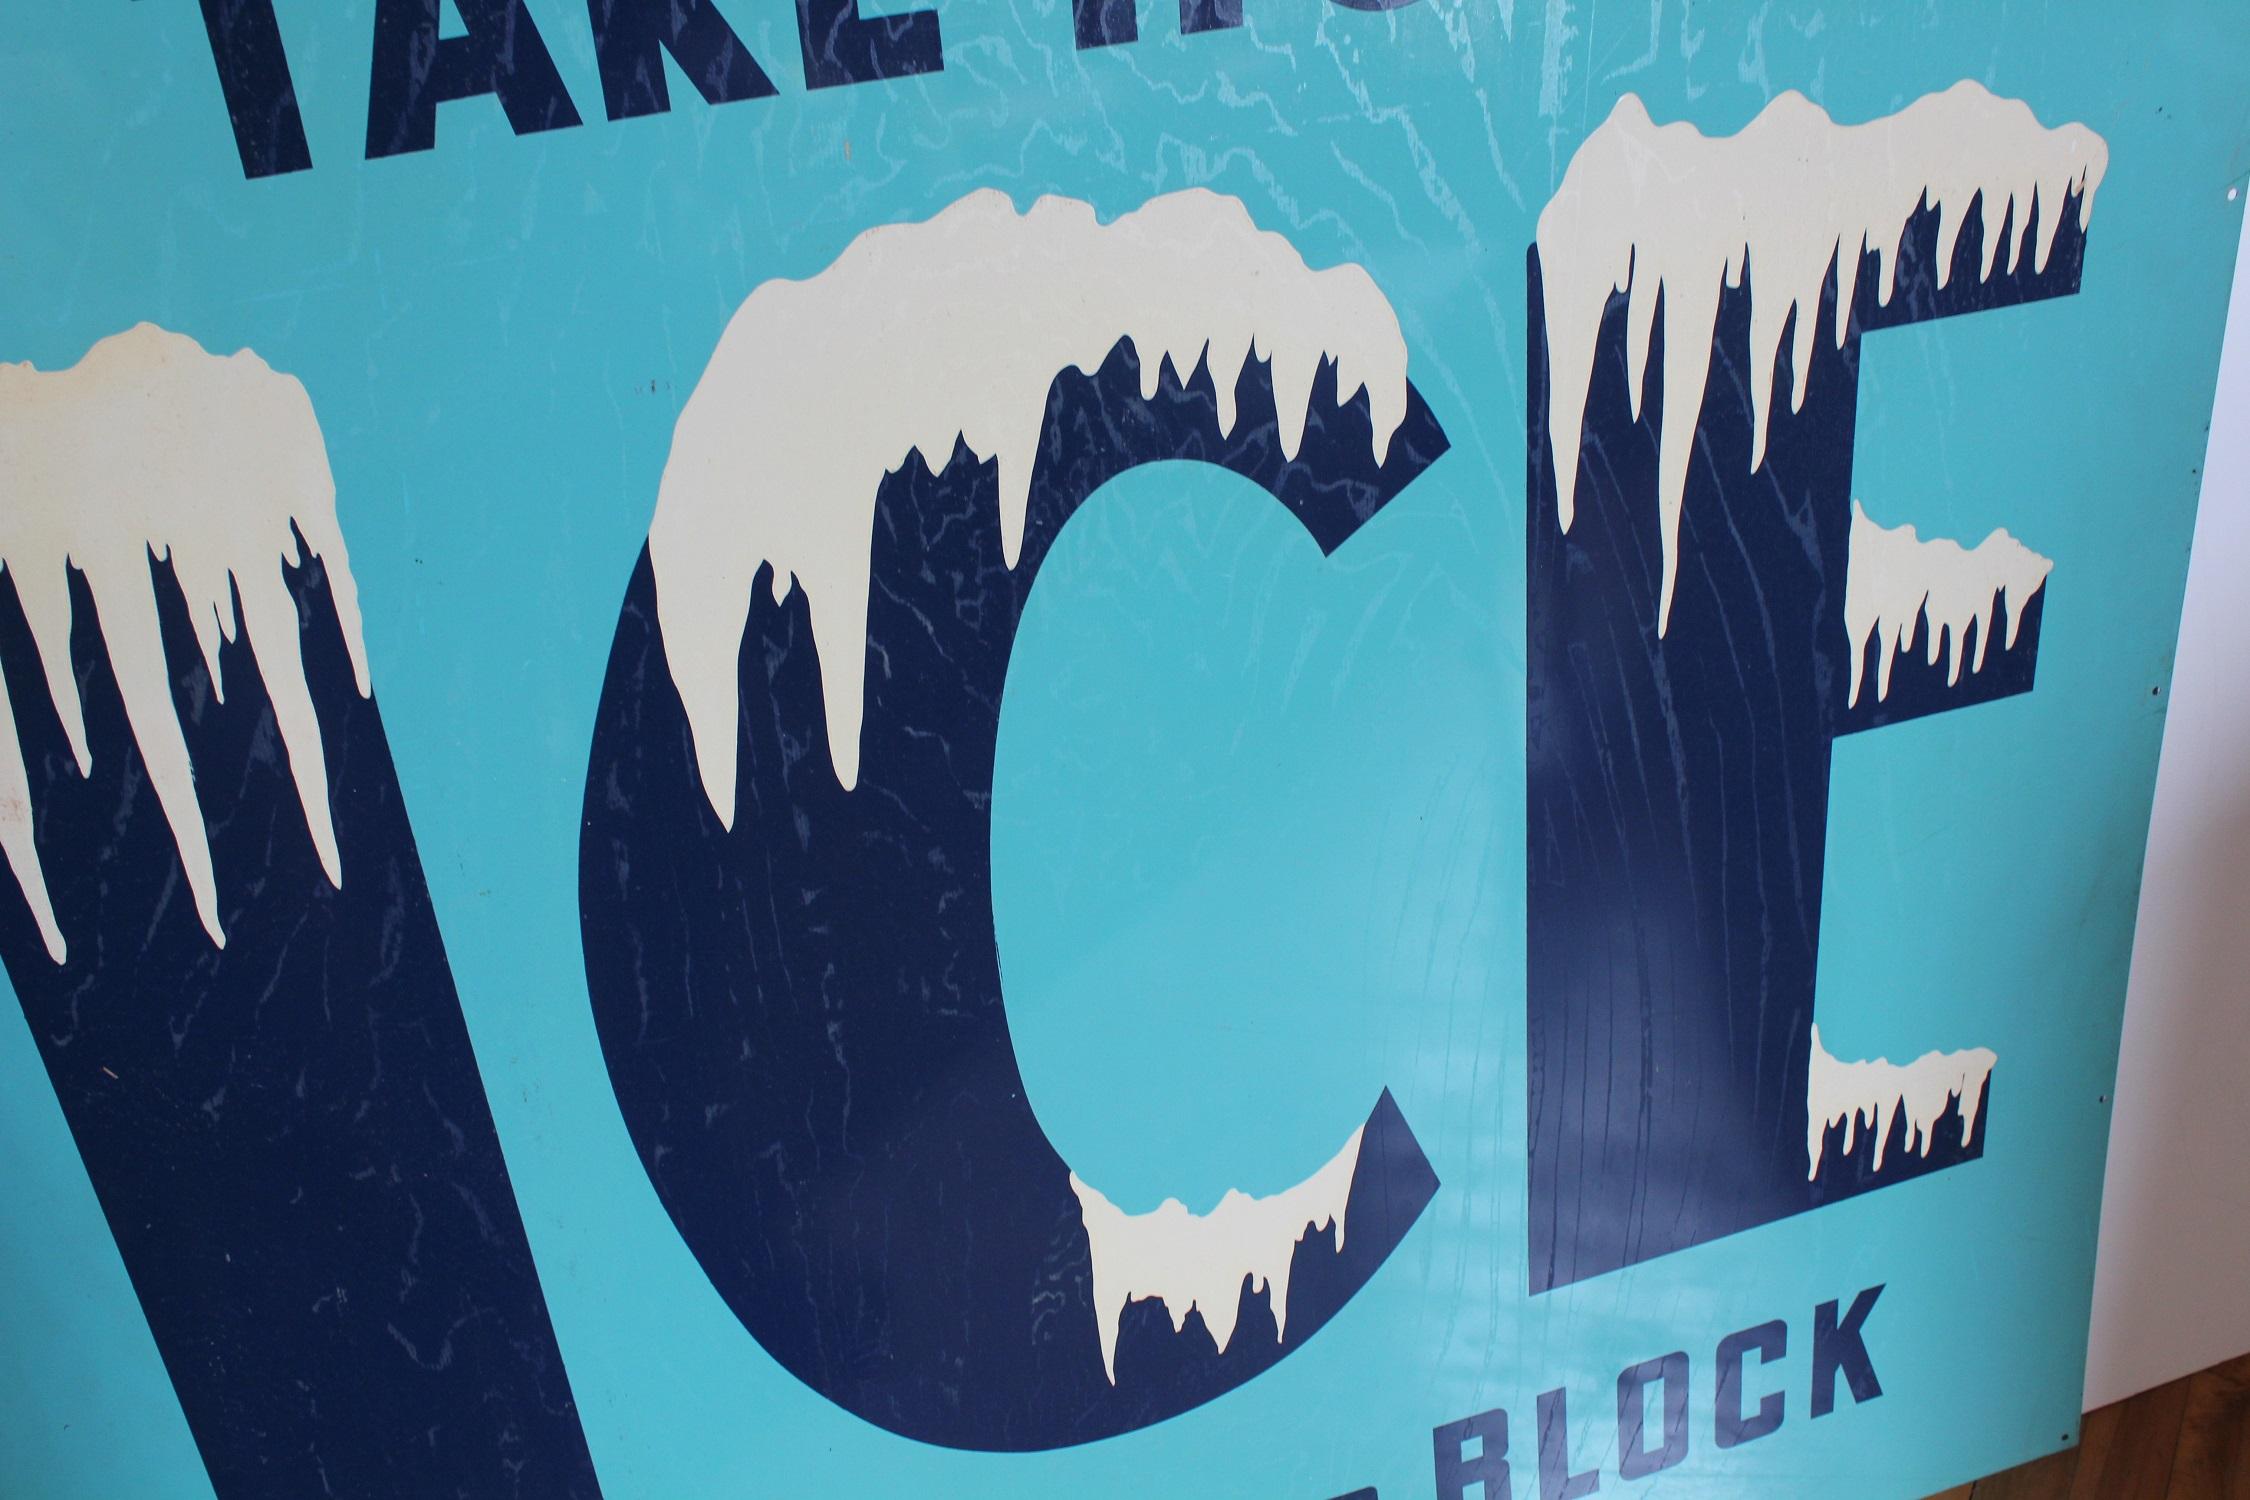 Large 1950s metal sign “Take Home Ice Crushed Or Block”.